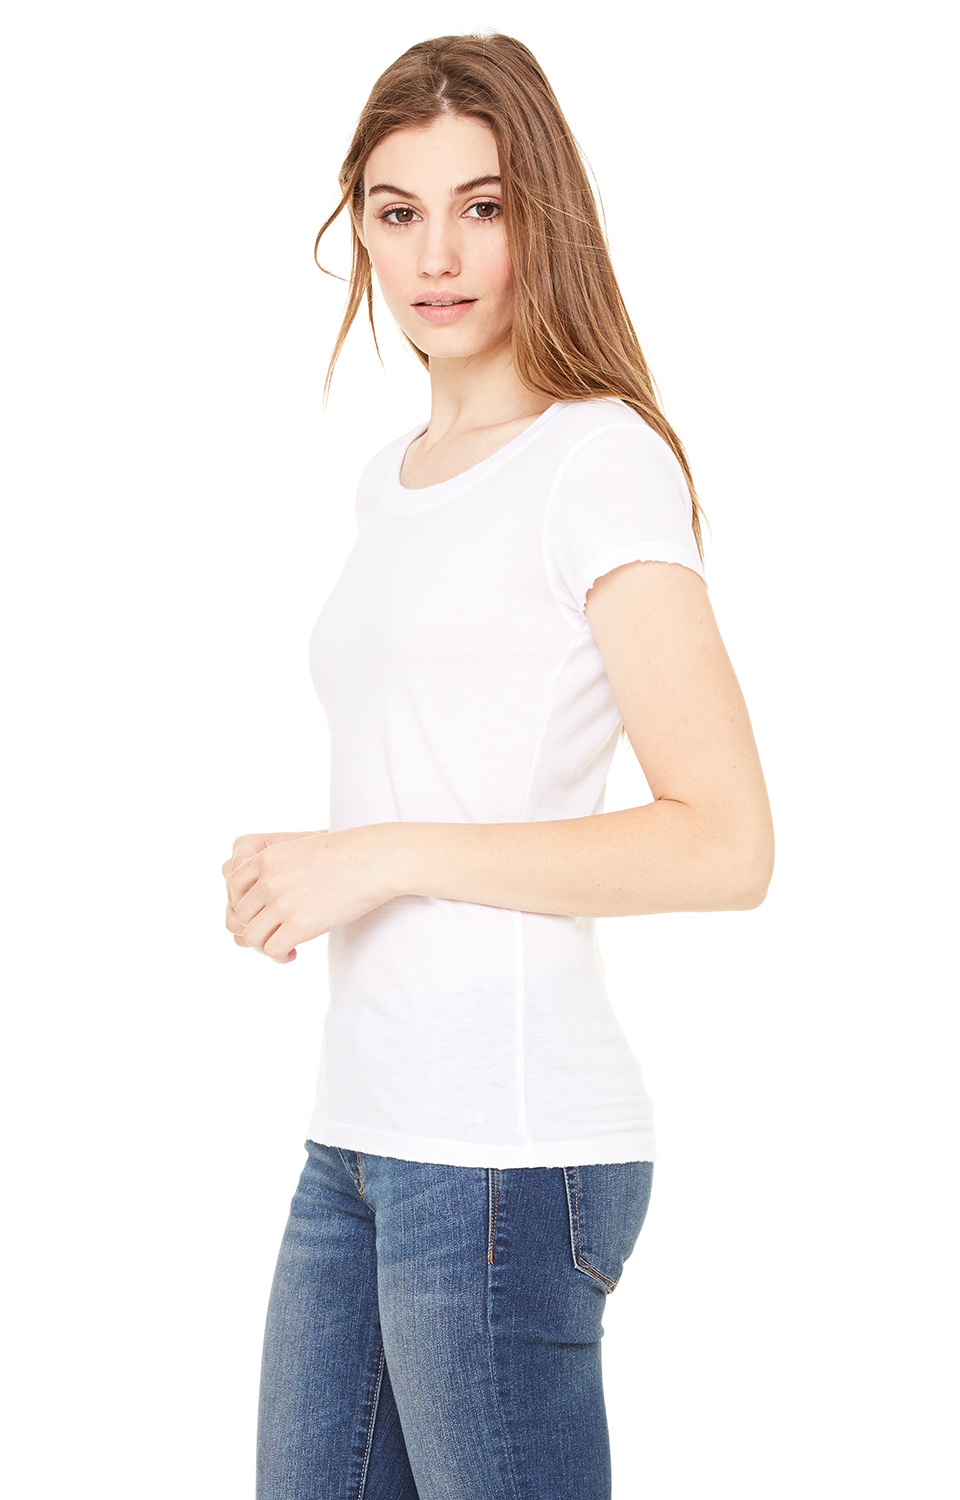 Bella + Canvas 8402 White Ladies' Vintage Jersey Short-Sleeve T-Shirt